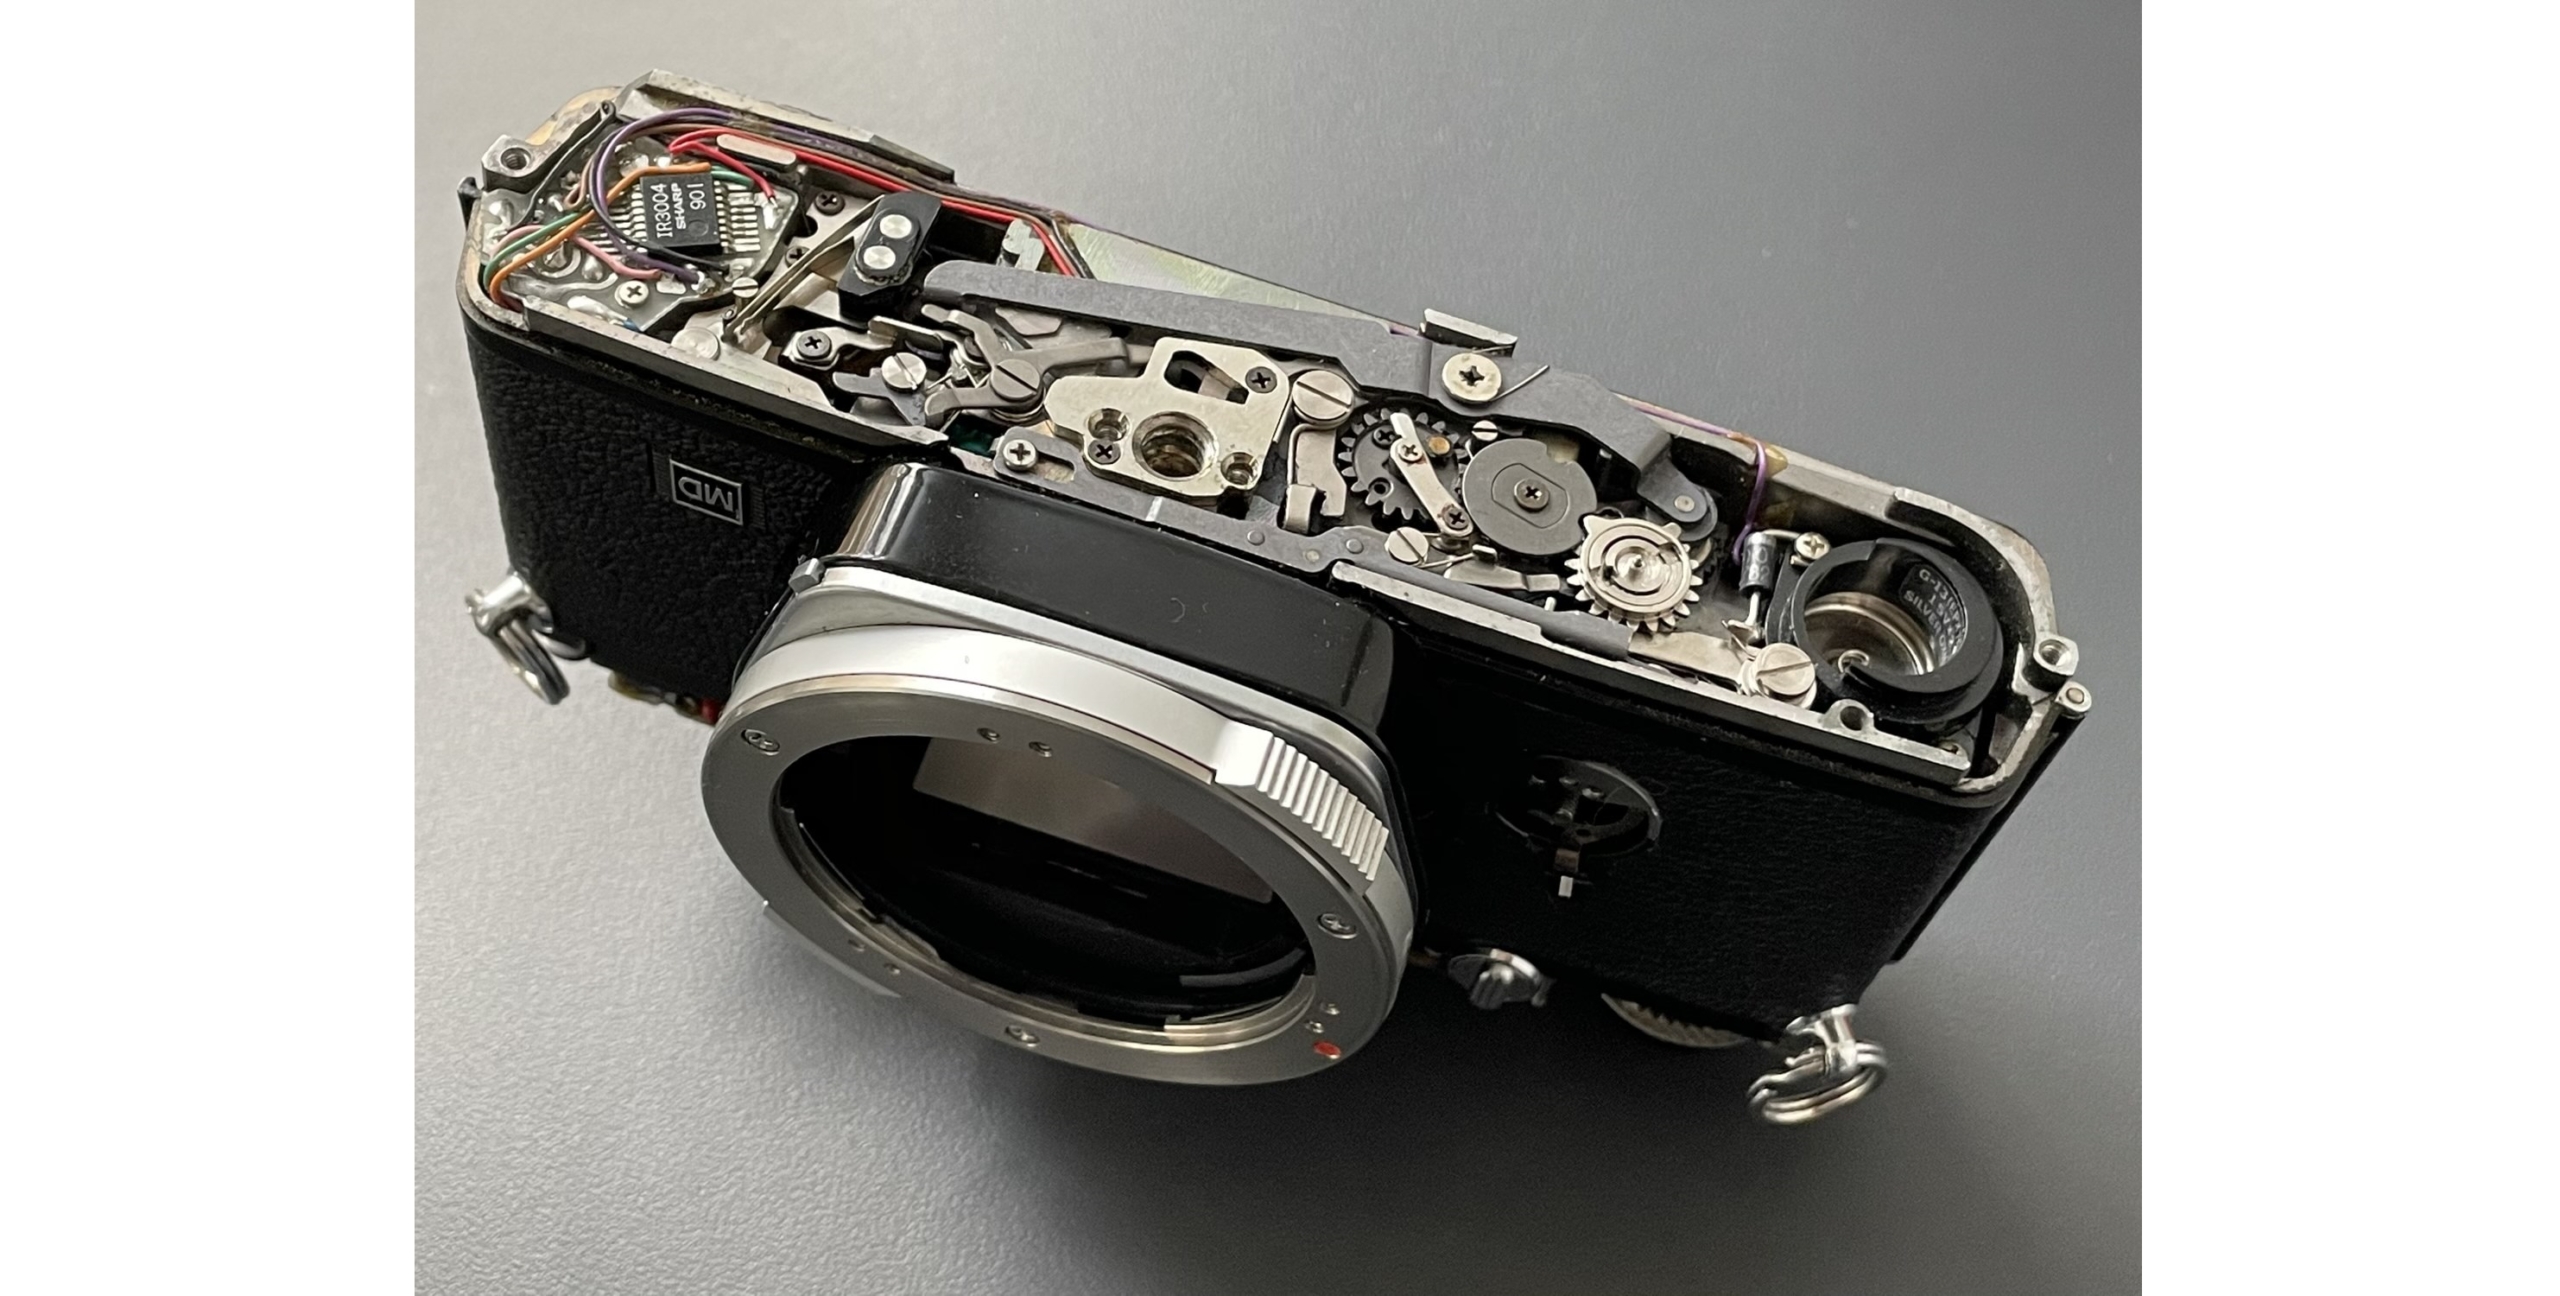 Одна з аналогових камер у частково розібраному вигляді, посилання на фото: https://www.ifixit.com/News/47088/finding-and-fixing-an-old-film-camera-part-1-the-road-to-olympus